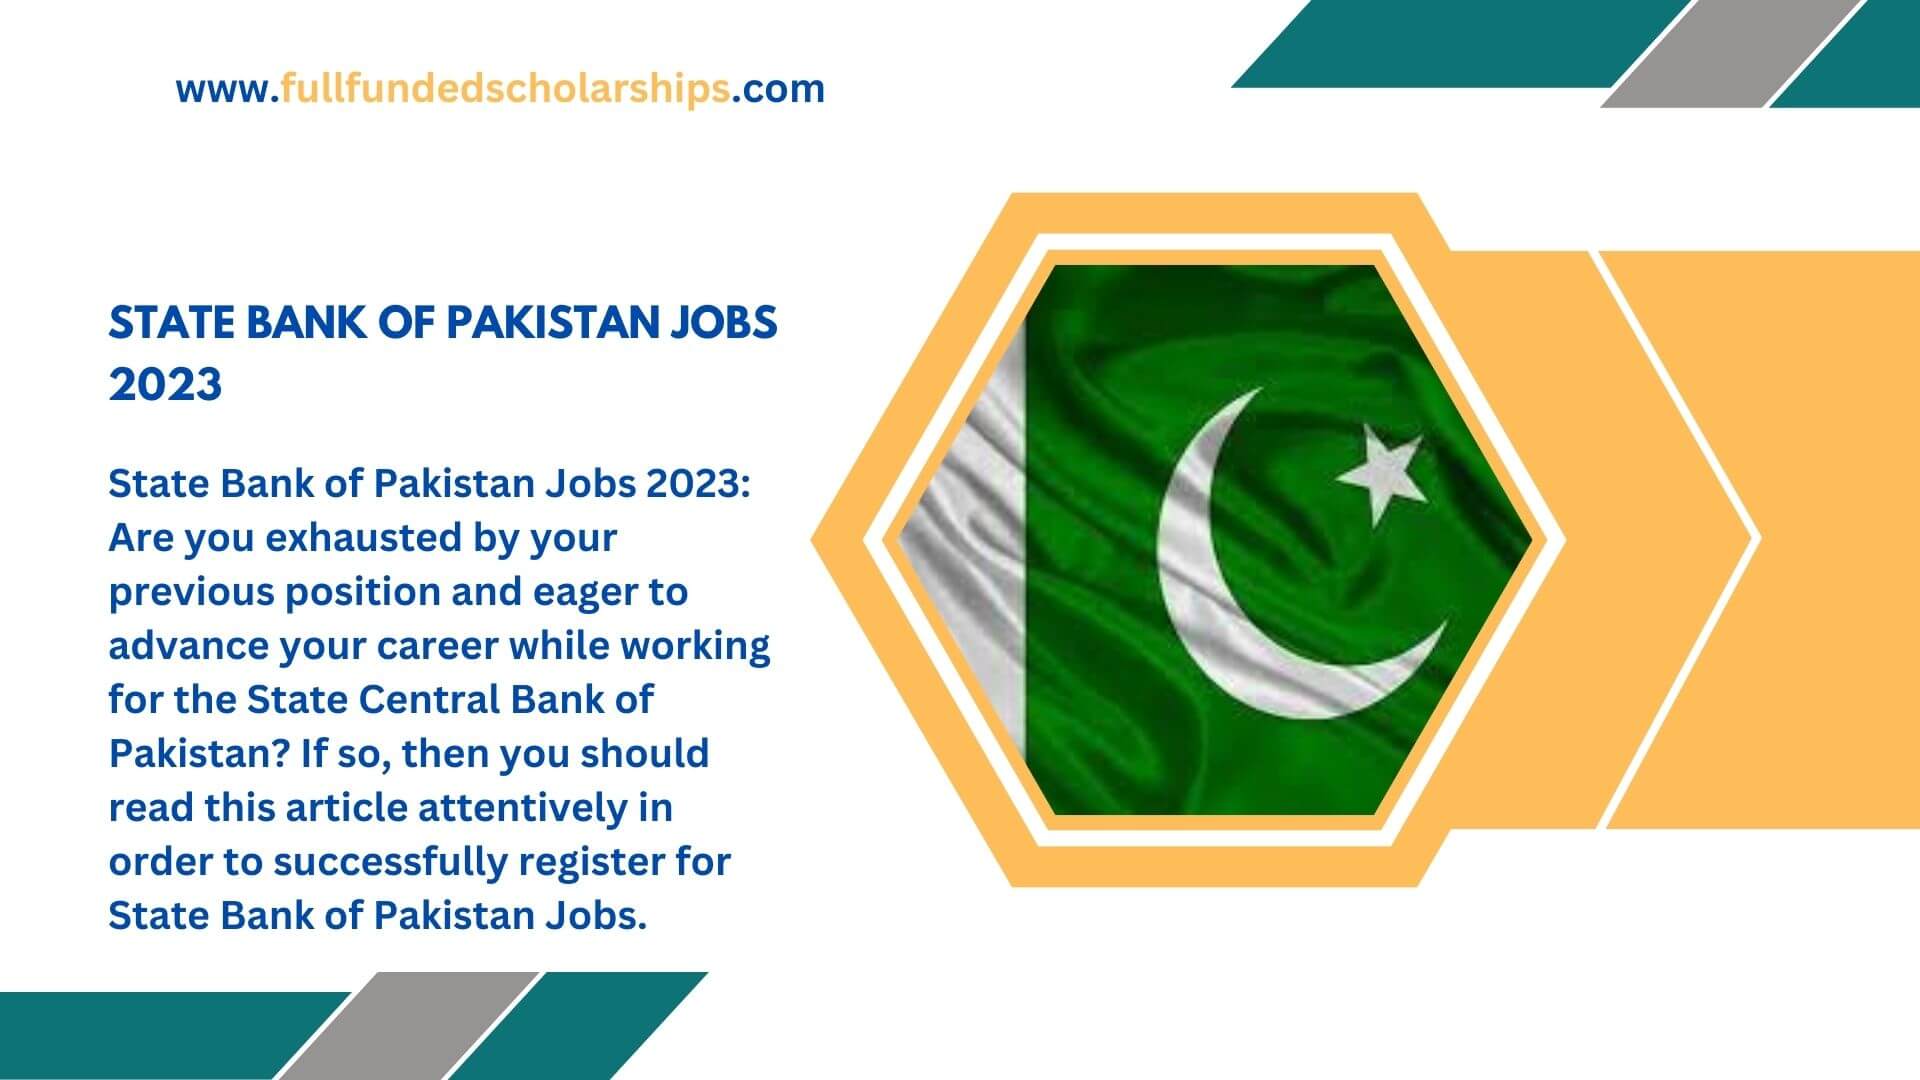 State Bank of Pakistan Jobs 2023